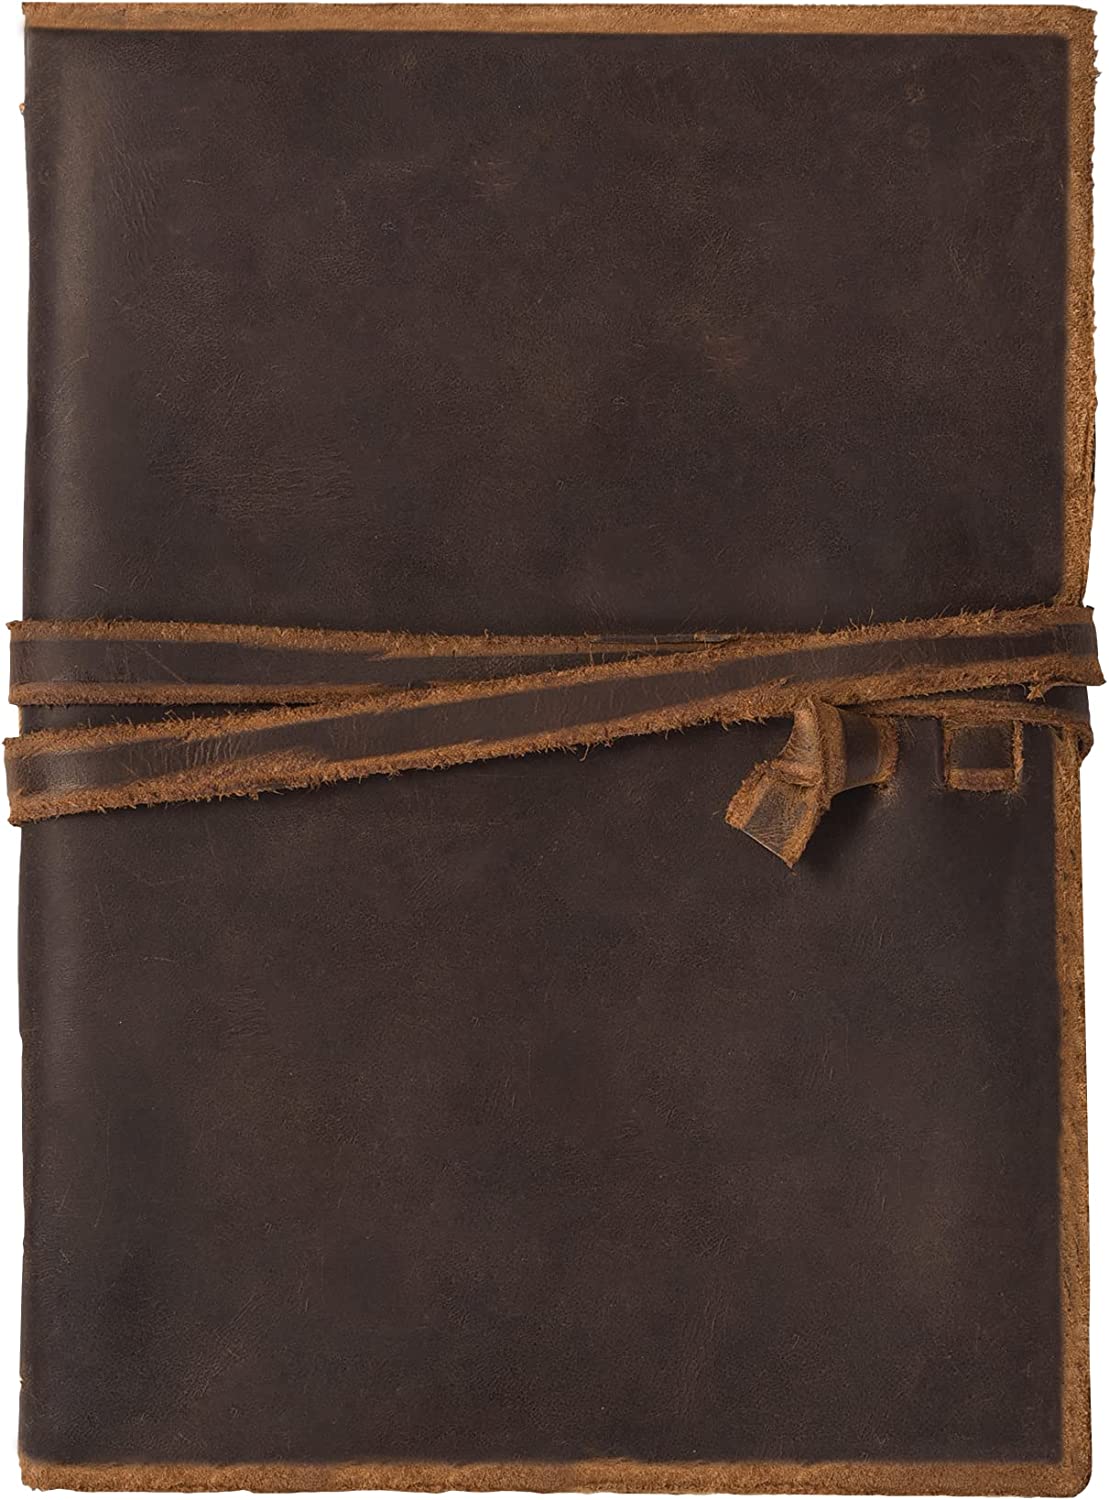 Vintage Leather Journal Notebook Deckle Paper - Teak (9x7)